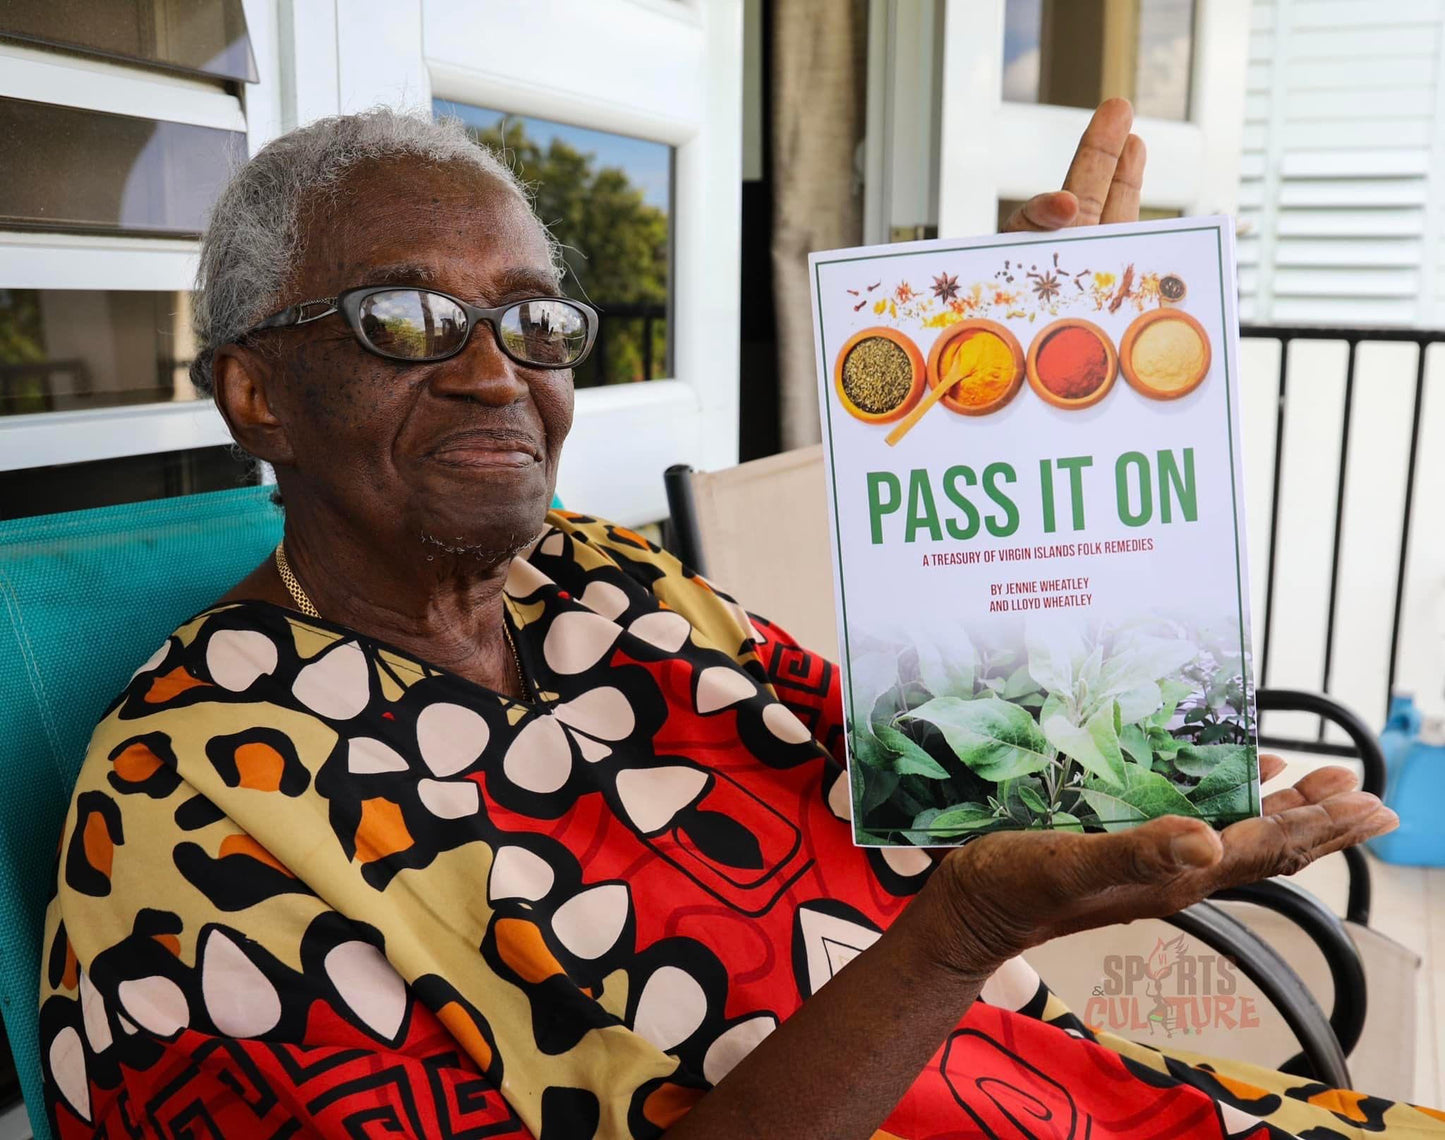 Pass It On - A Treasury of Virgin Islands Folk Remedies